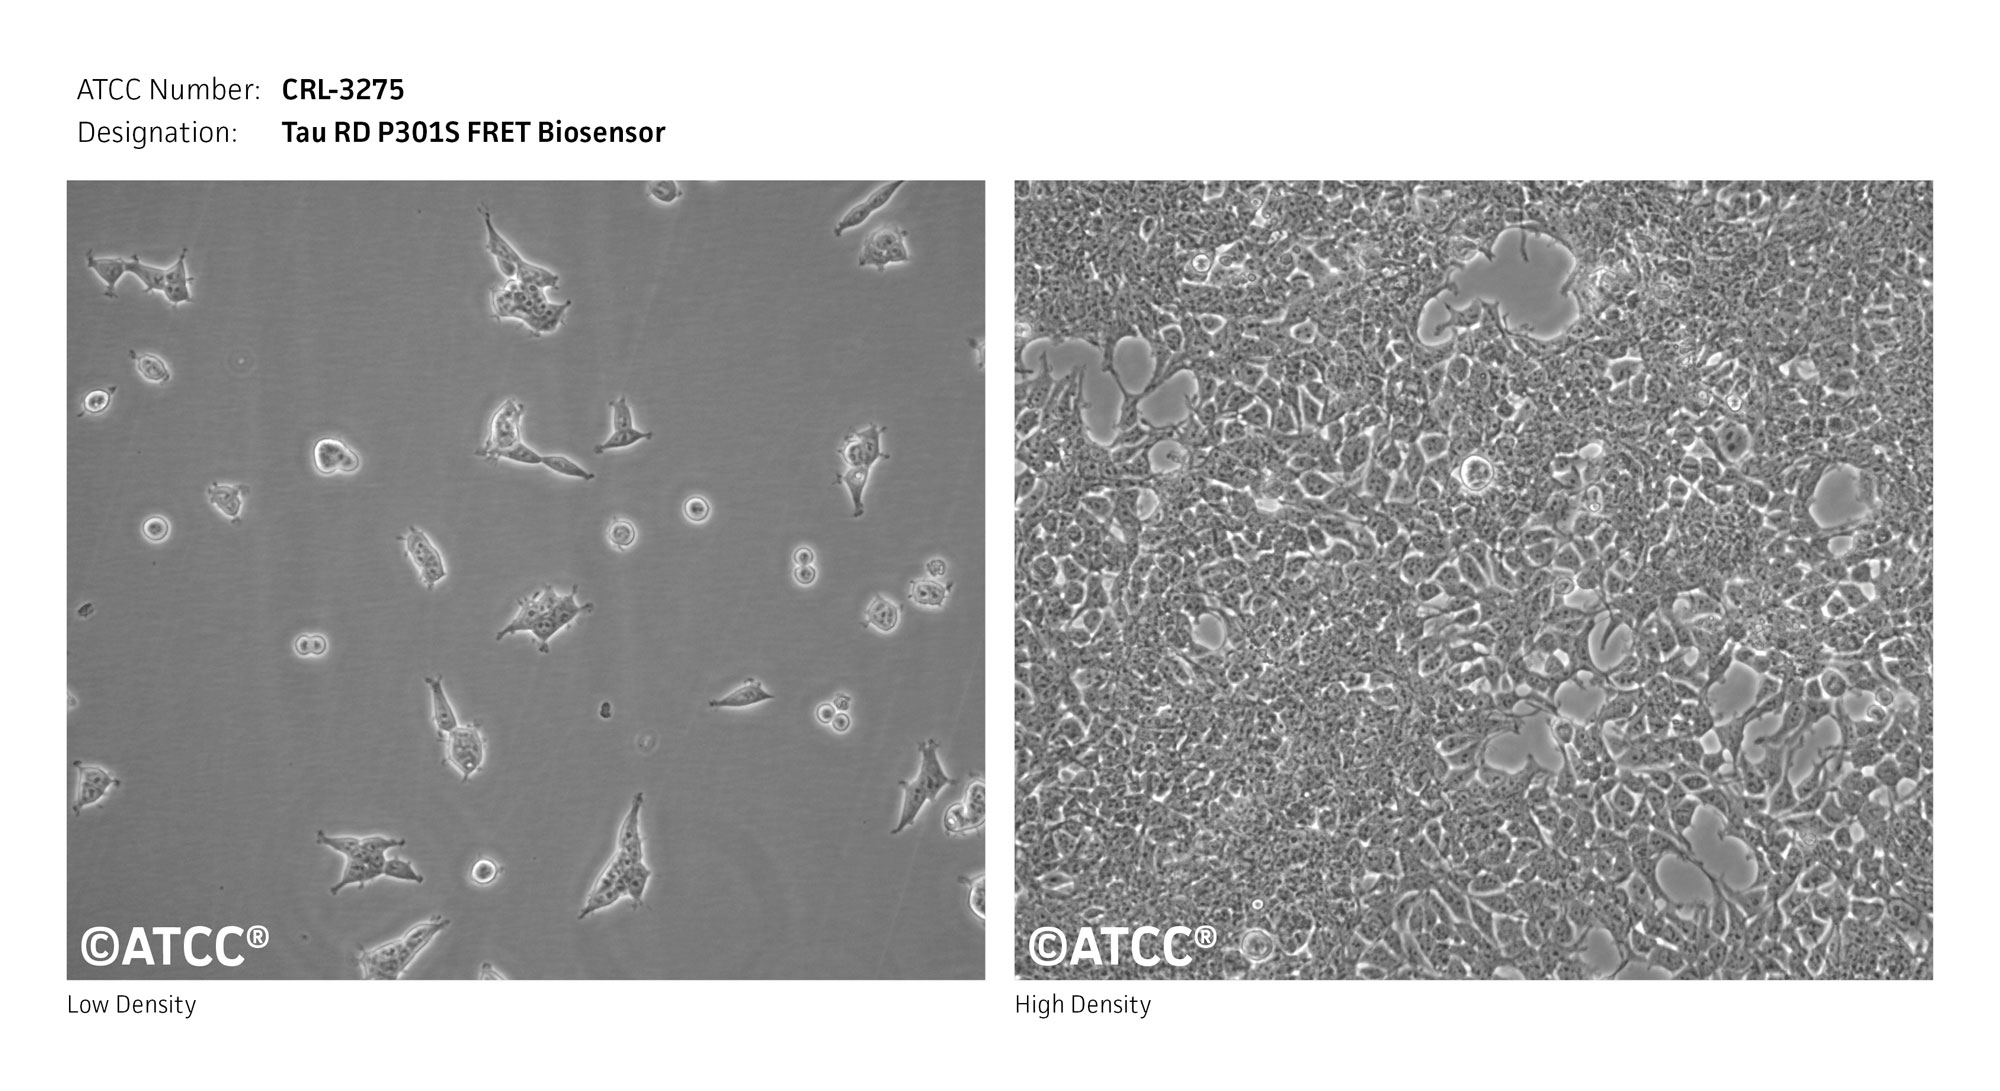 Cell Micrograph of Tau RD P301S FRET Biosensor ATCC CRL-3275